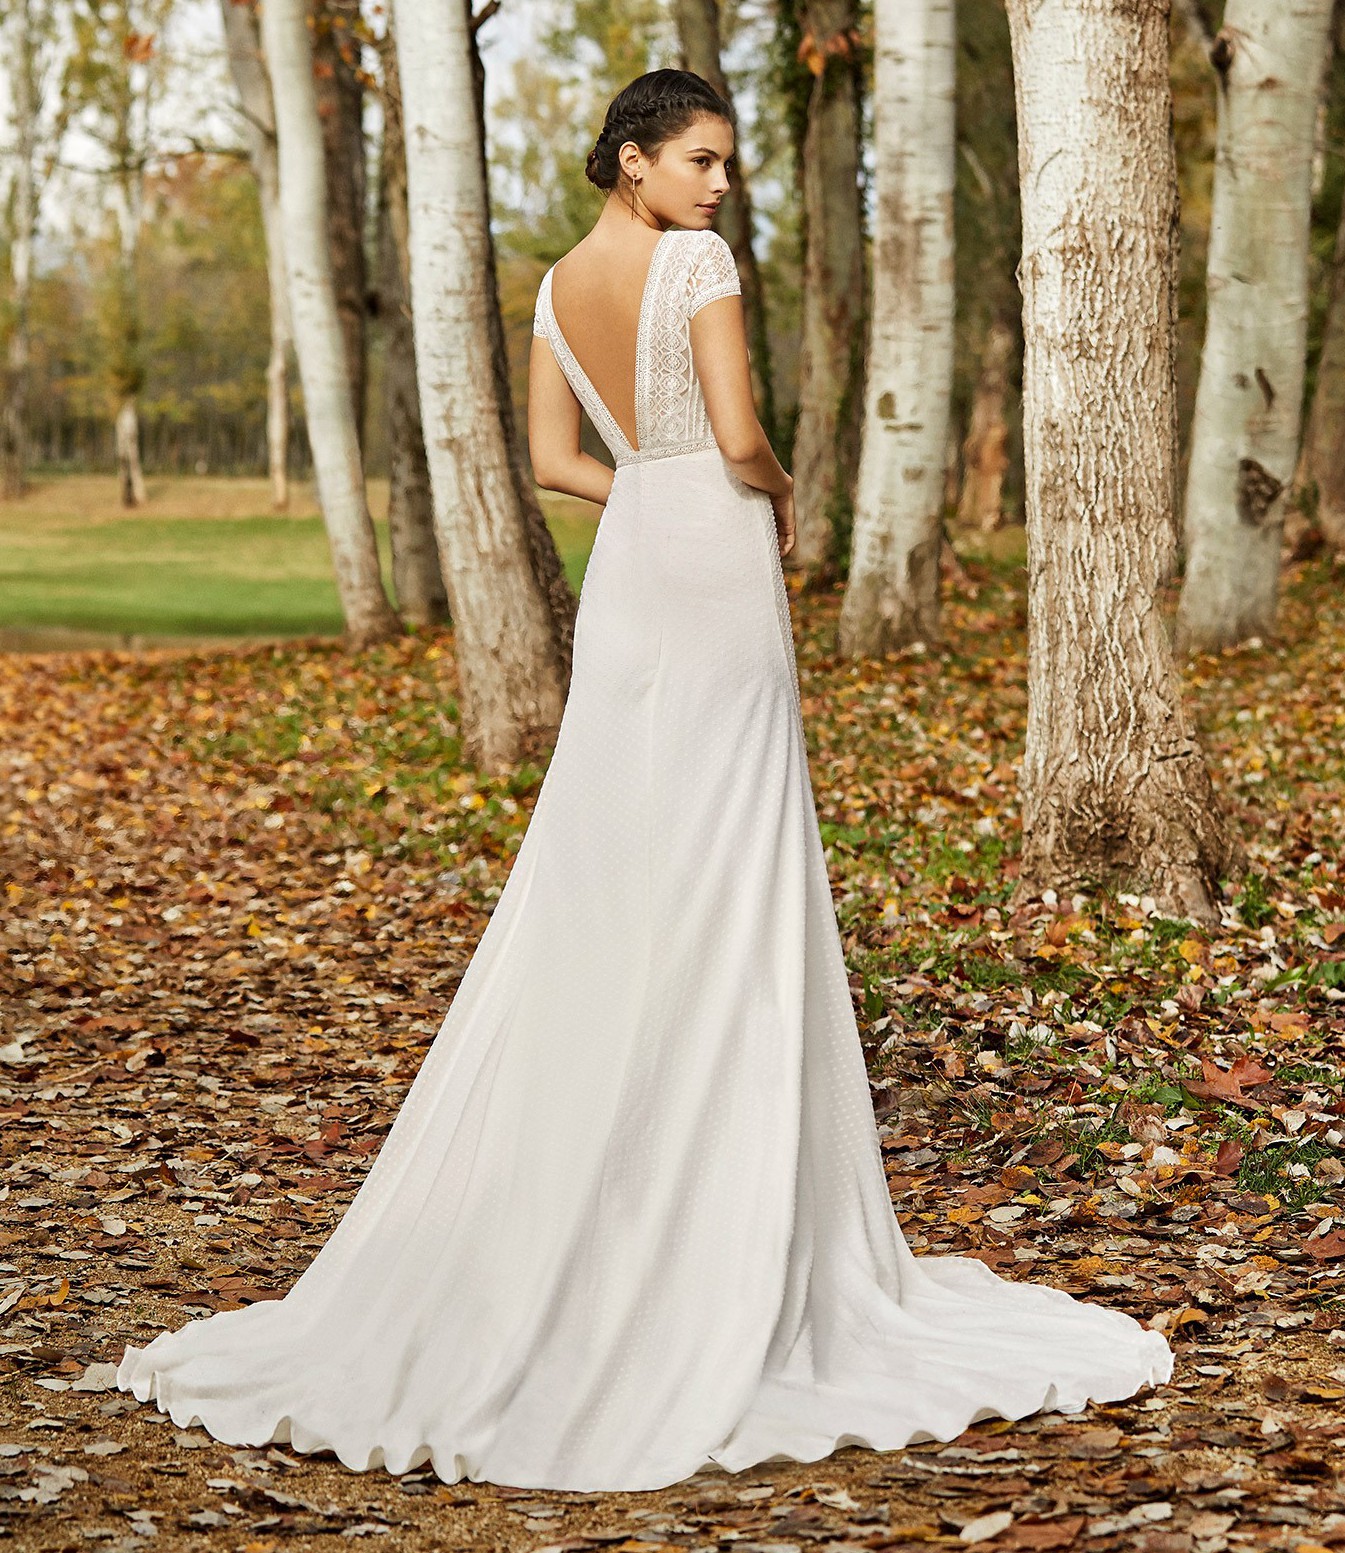 Alma Novia Olatz New Wedding Dress Save 44% - Stillwhite